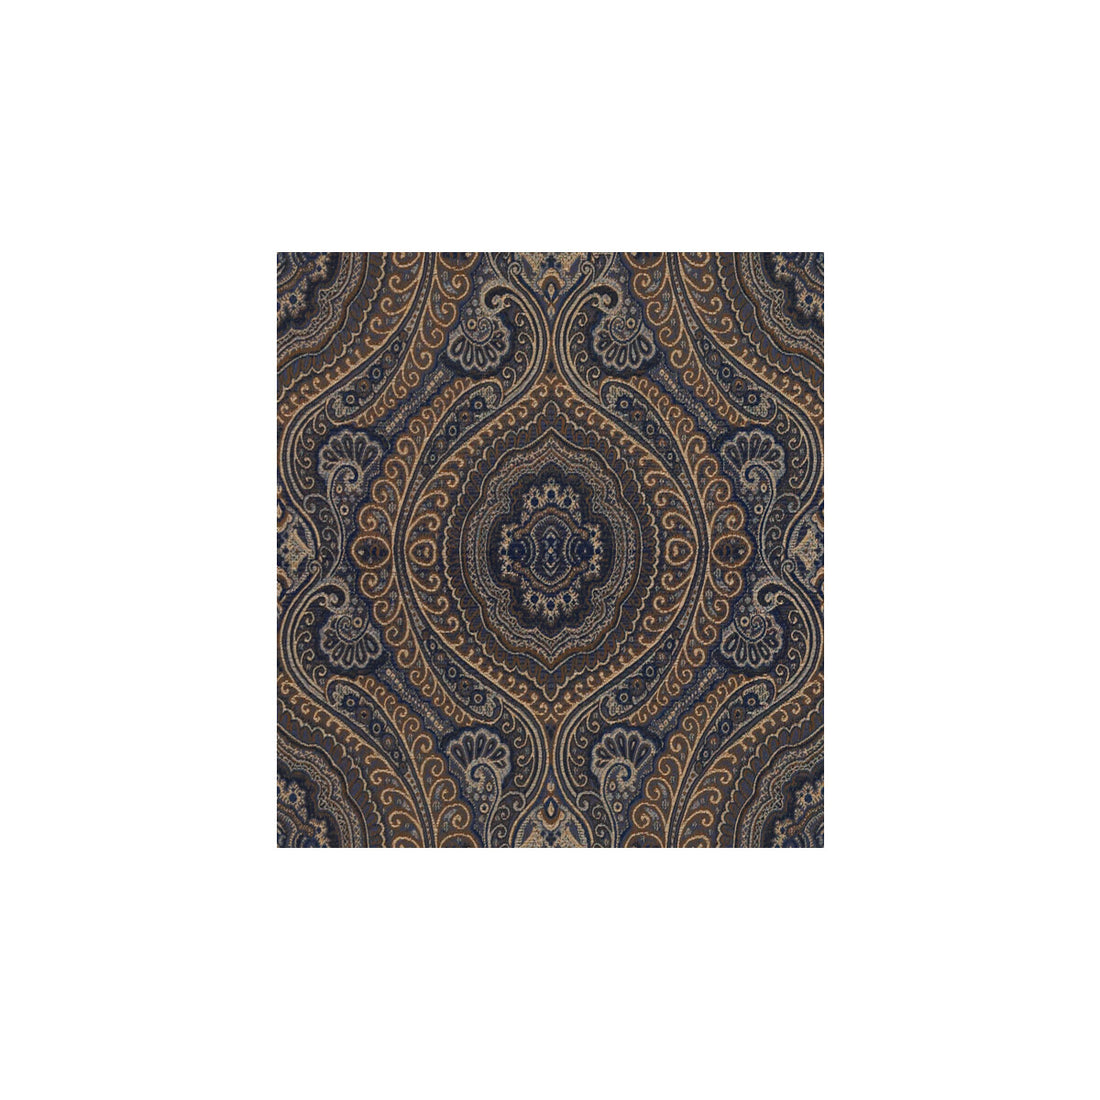 Kravet Design fabric in 31420-5 color - pattern 31420.5.0 - by Kravet Design in the Gis collection